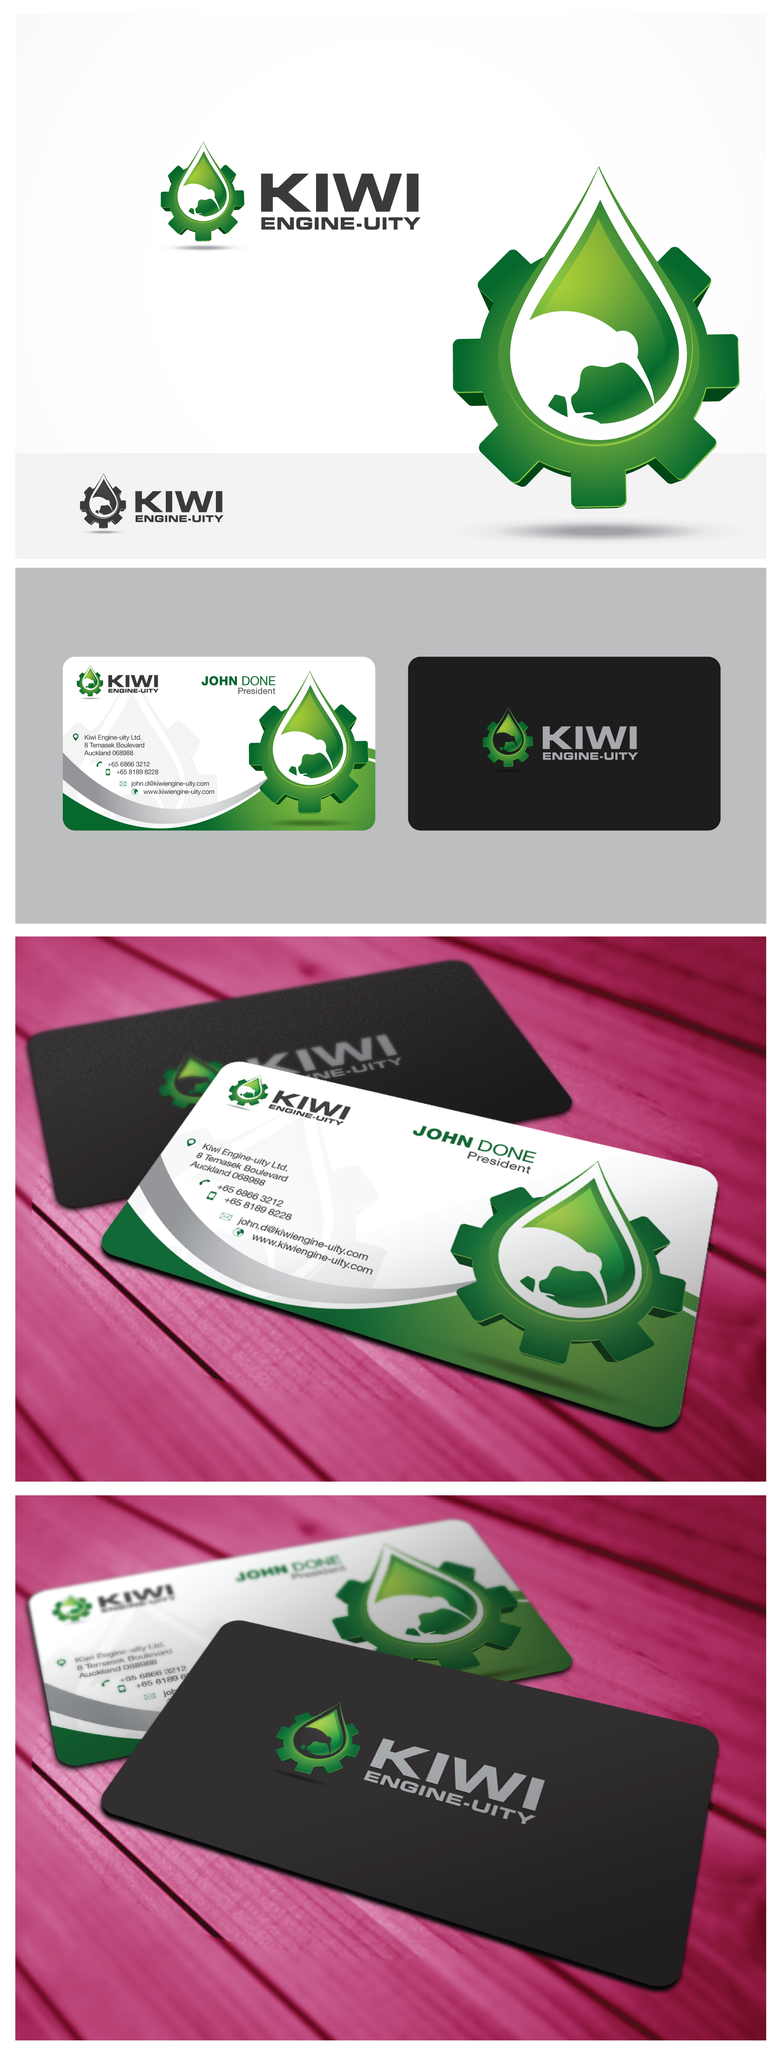 Kiwi Engine-Uity Logo and Business Card